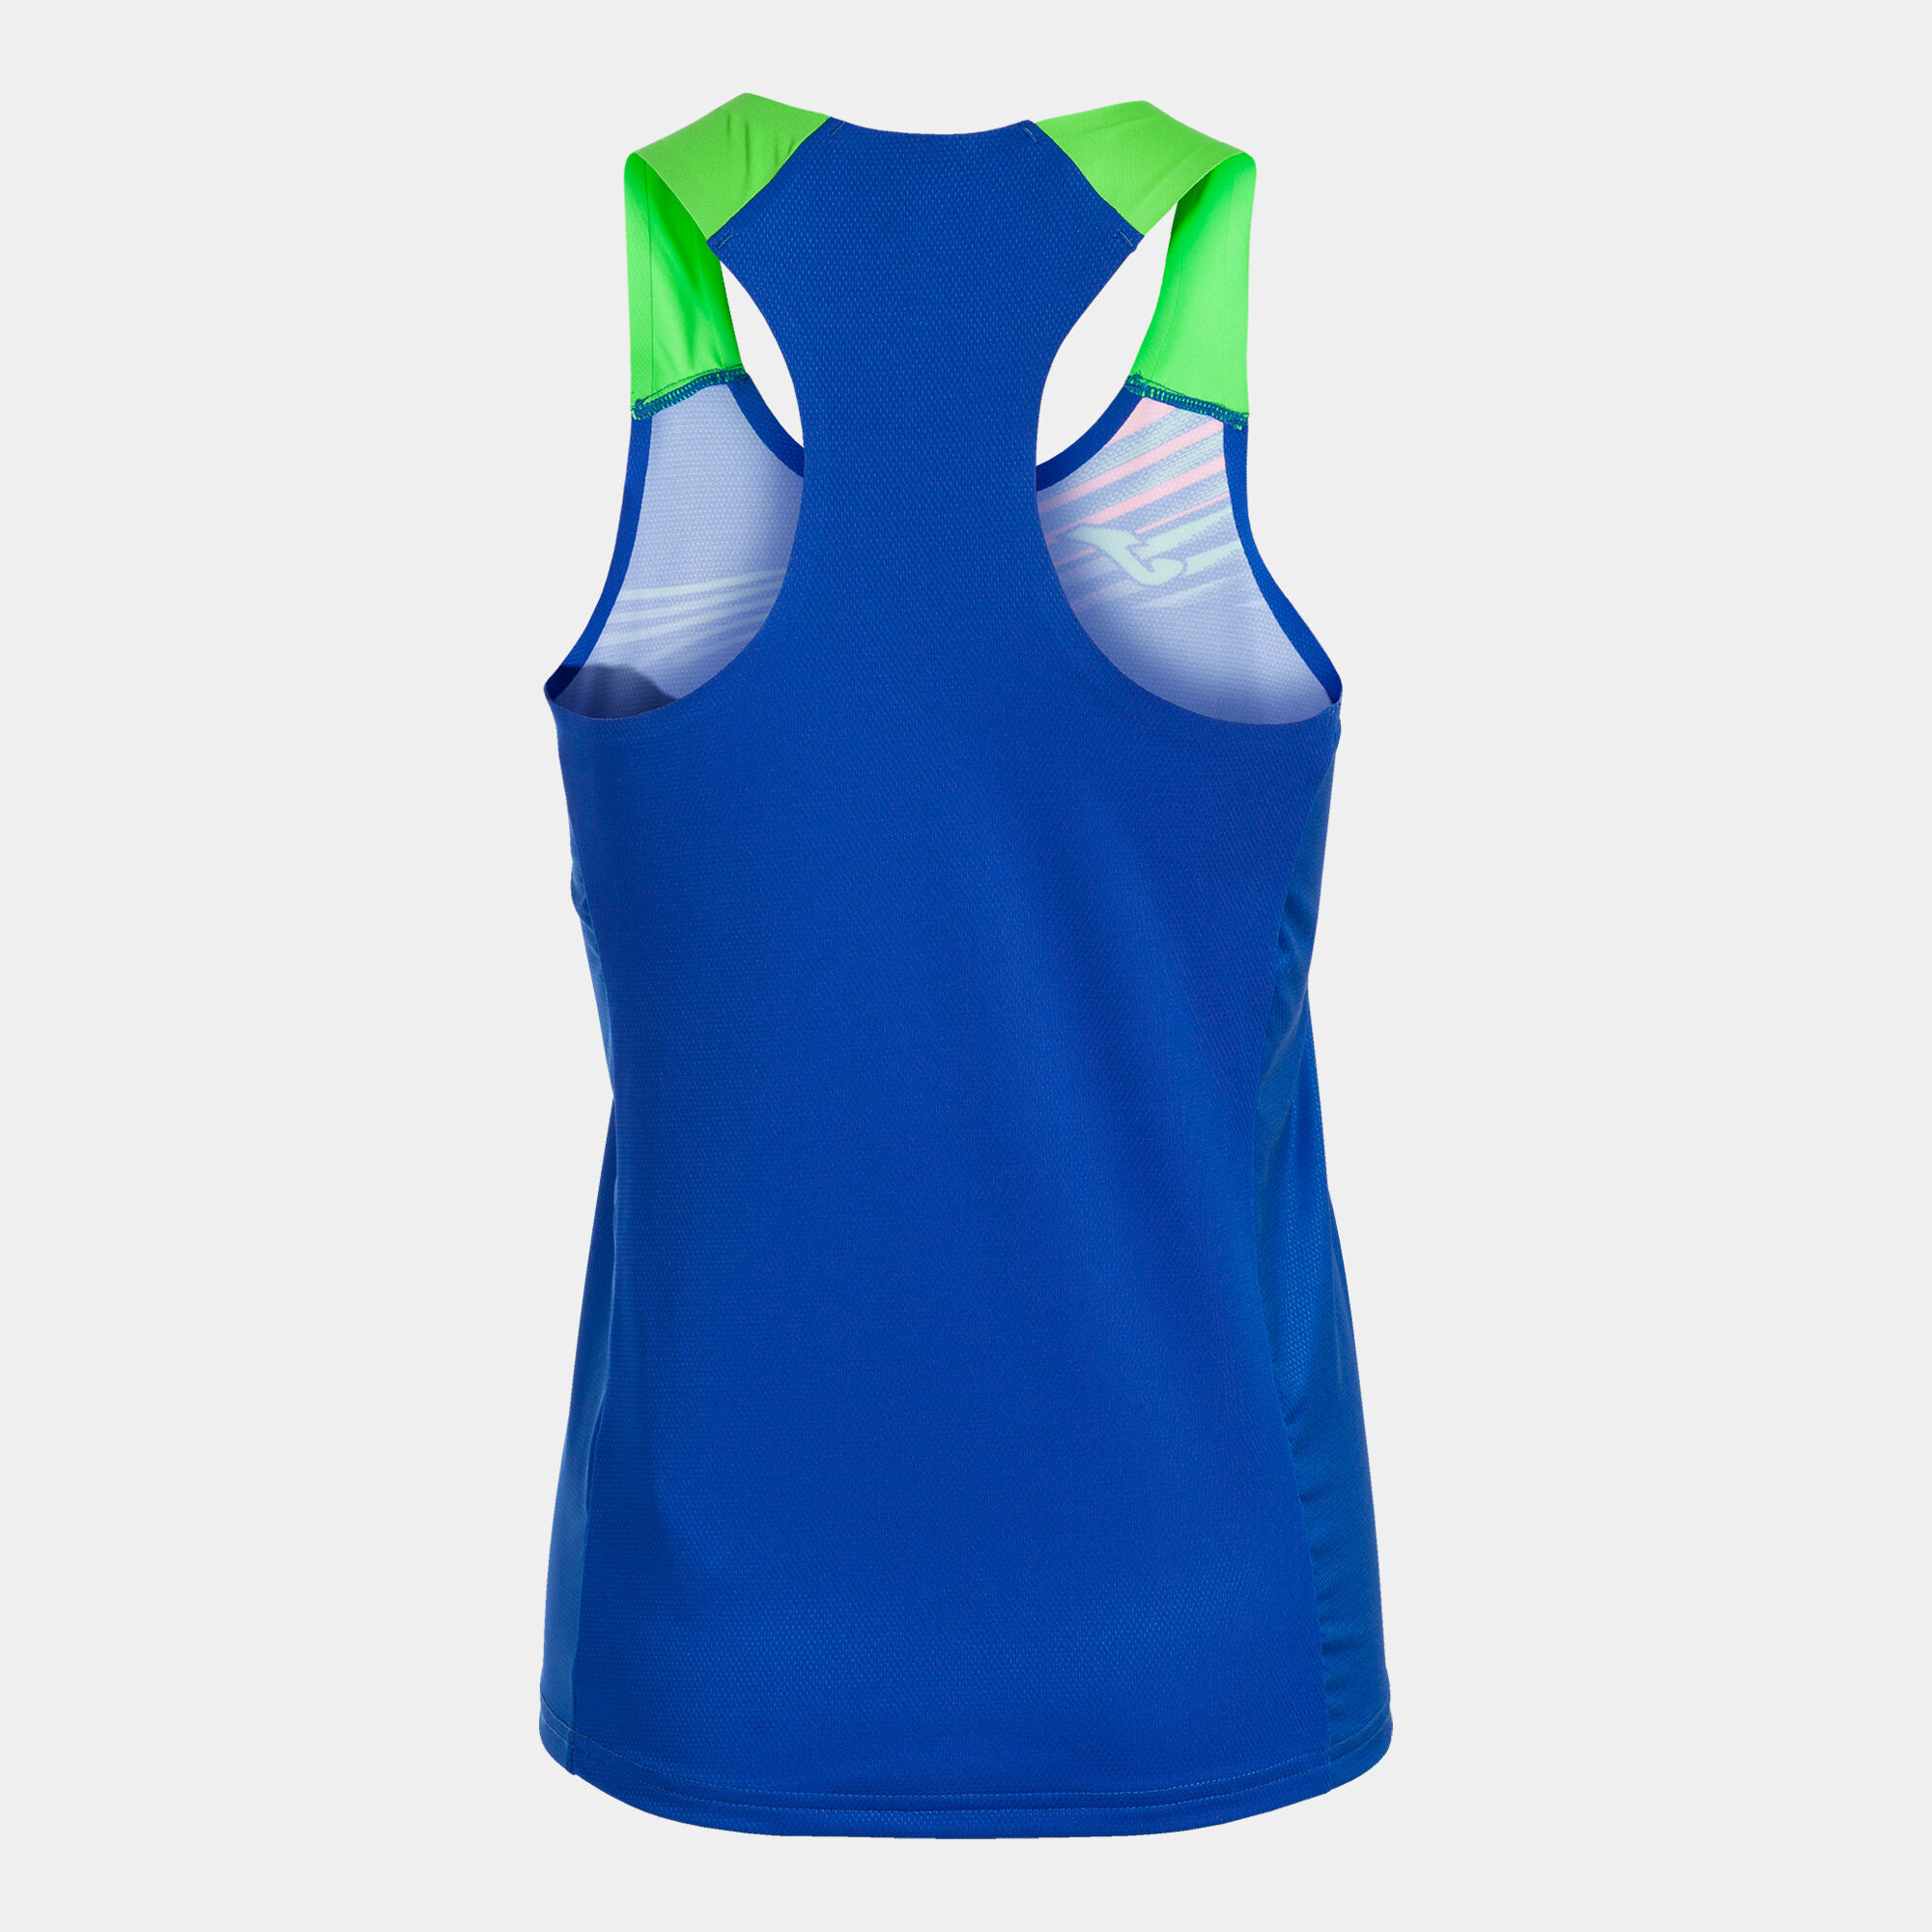 T-shirt de alça mulher Elite X azul royal verde fluorescente